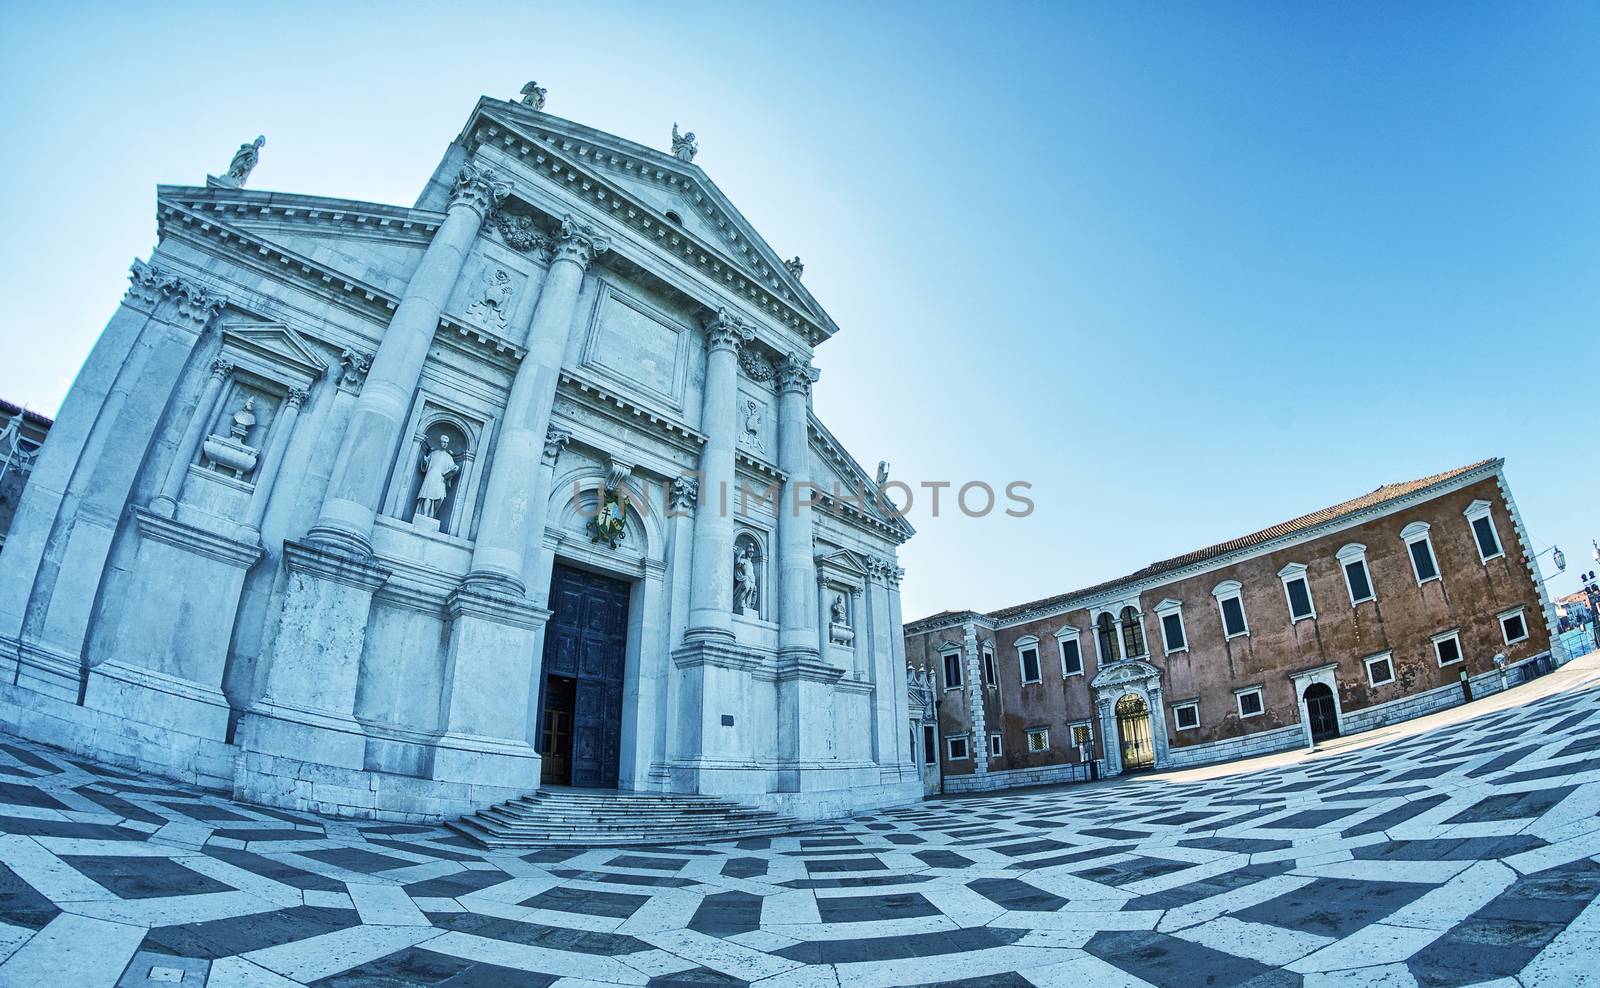 Basilica of Santa Maria della Salute in Venice by jovannig